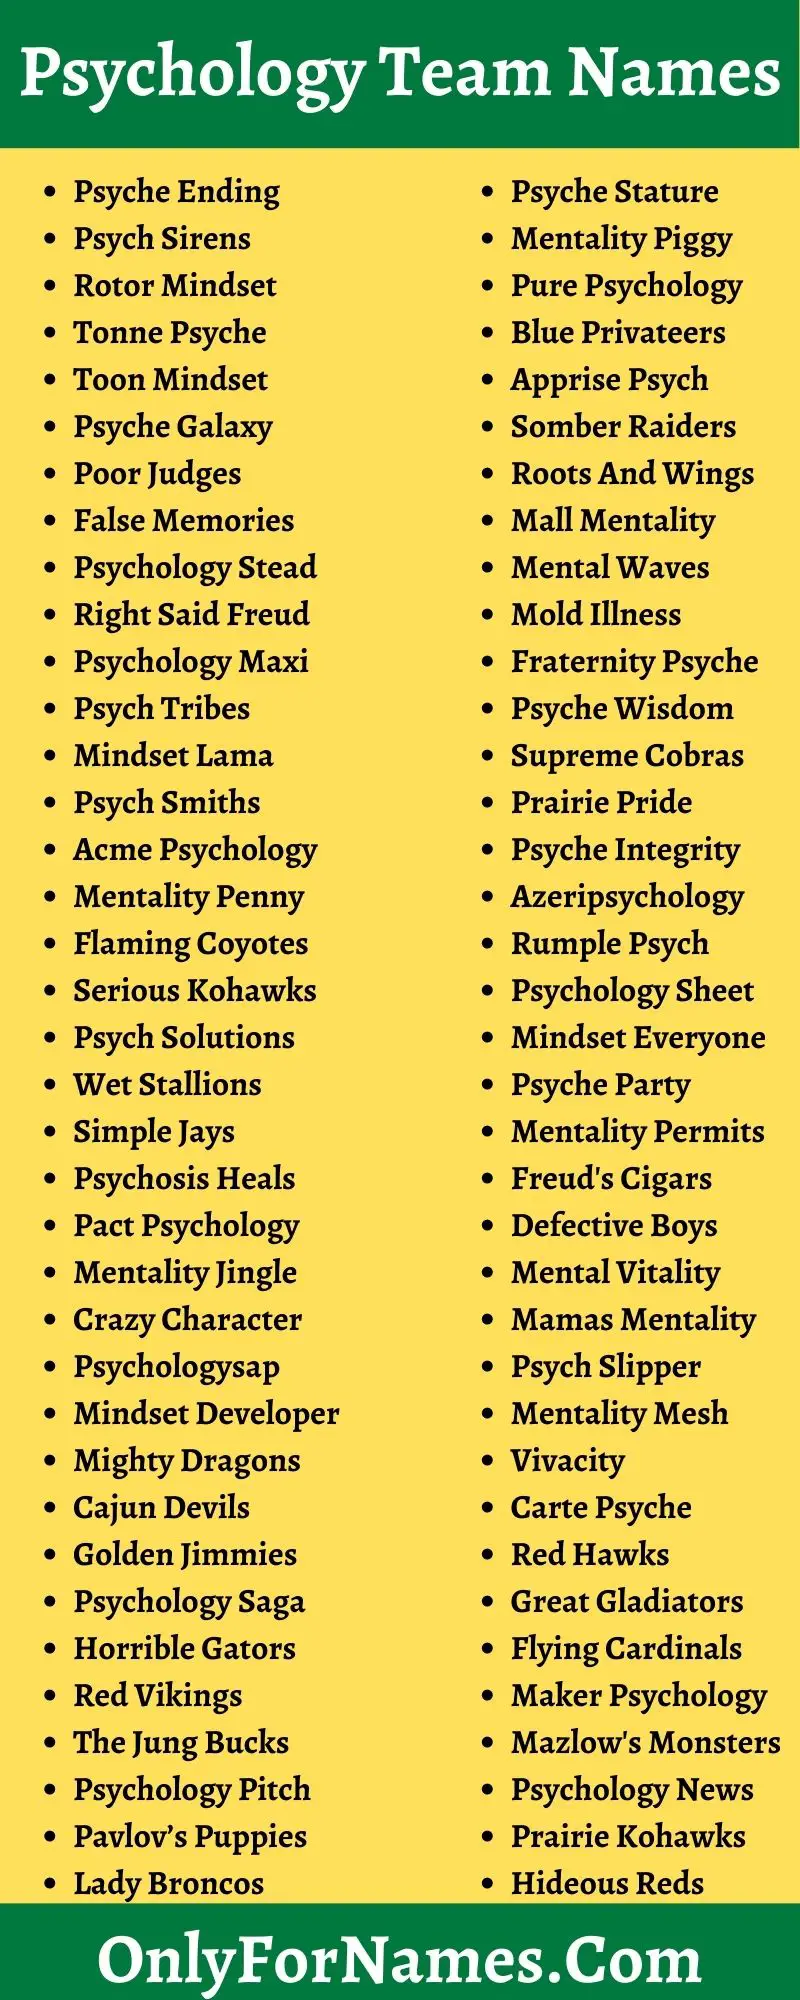 Psychology Team Names